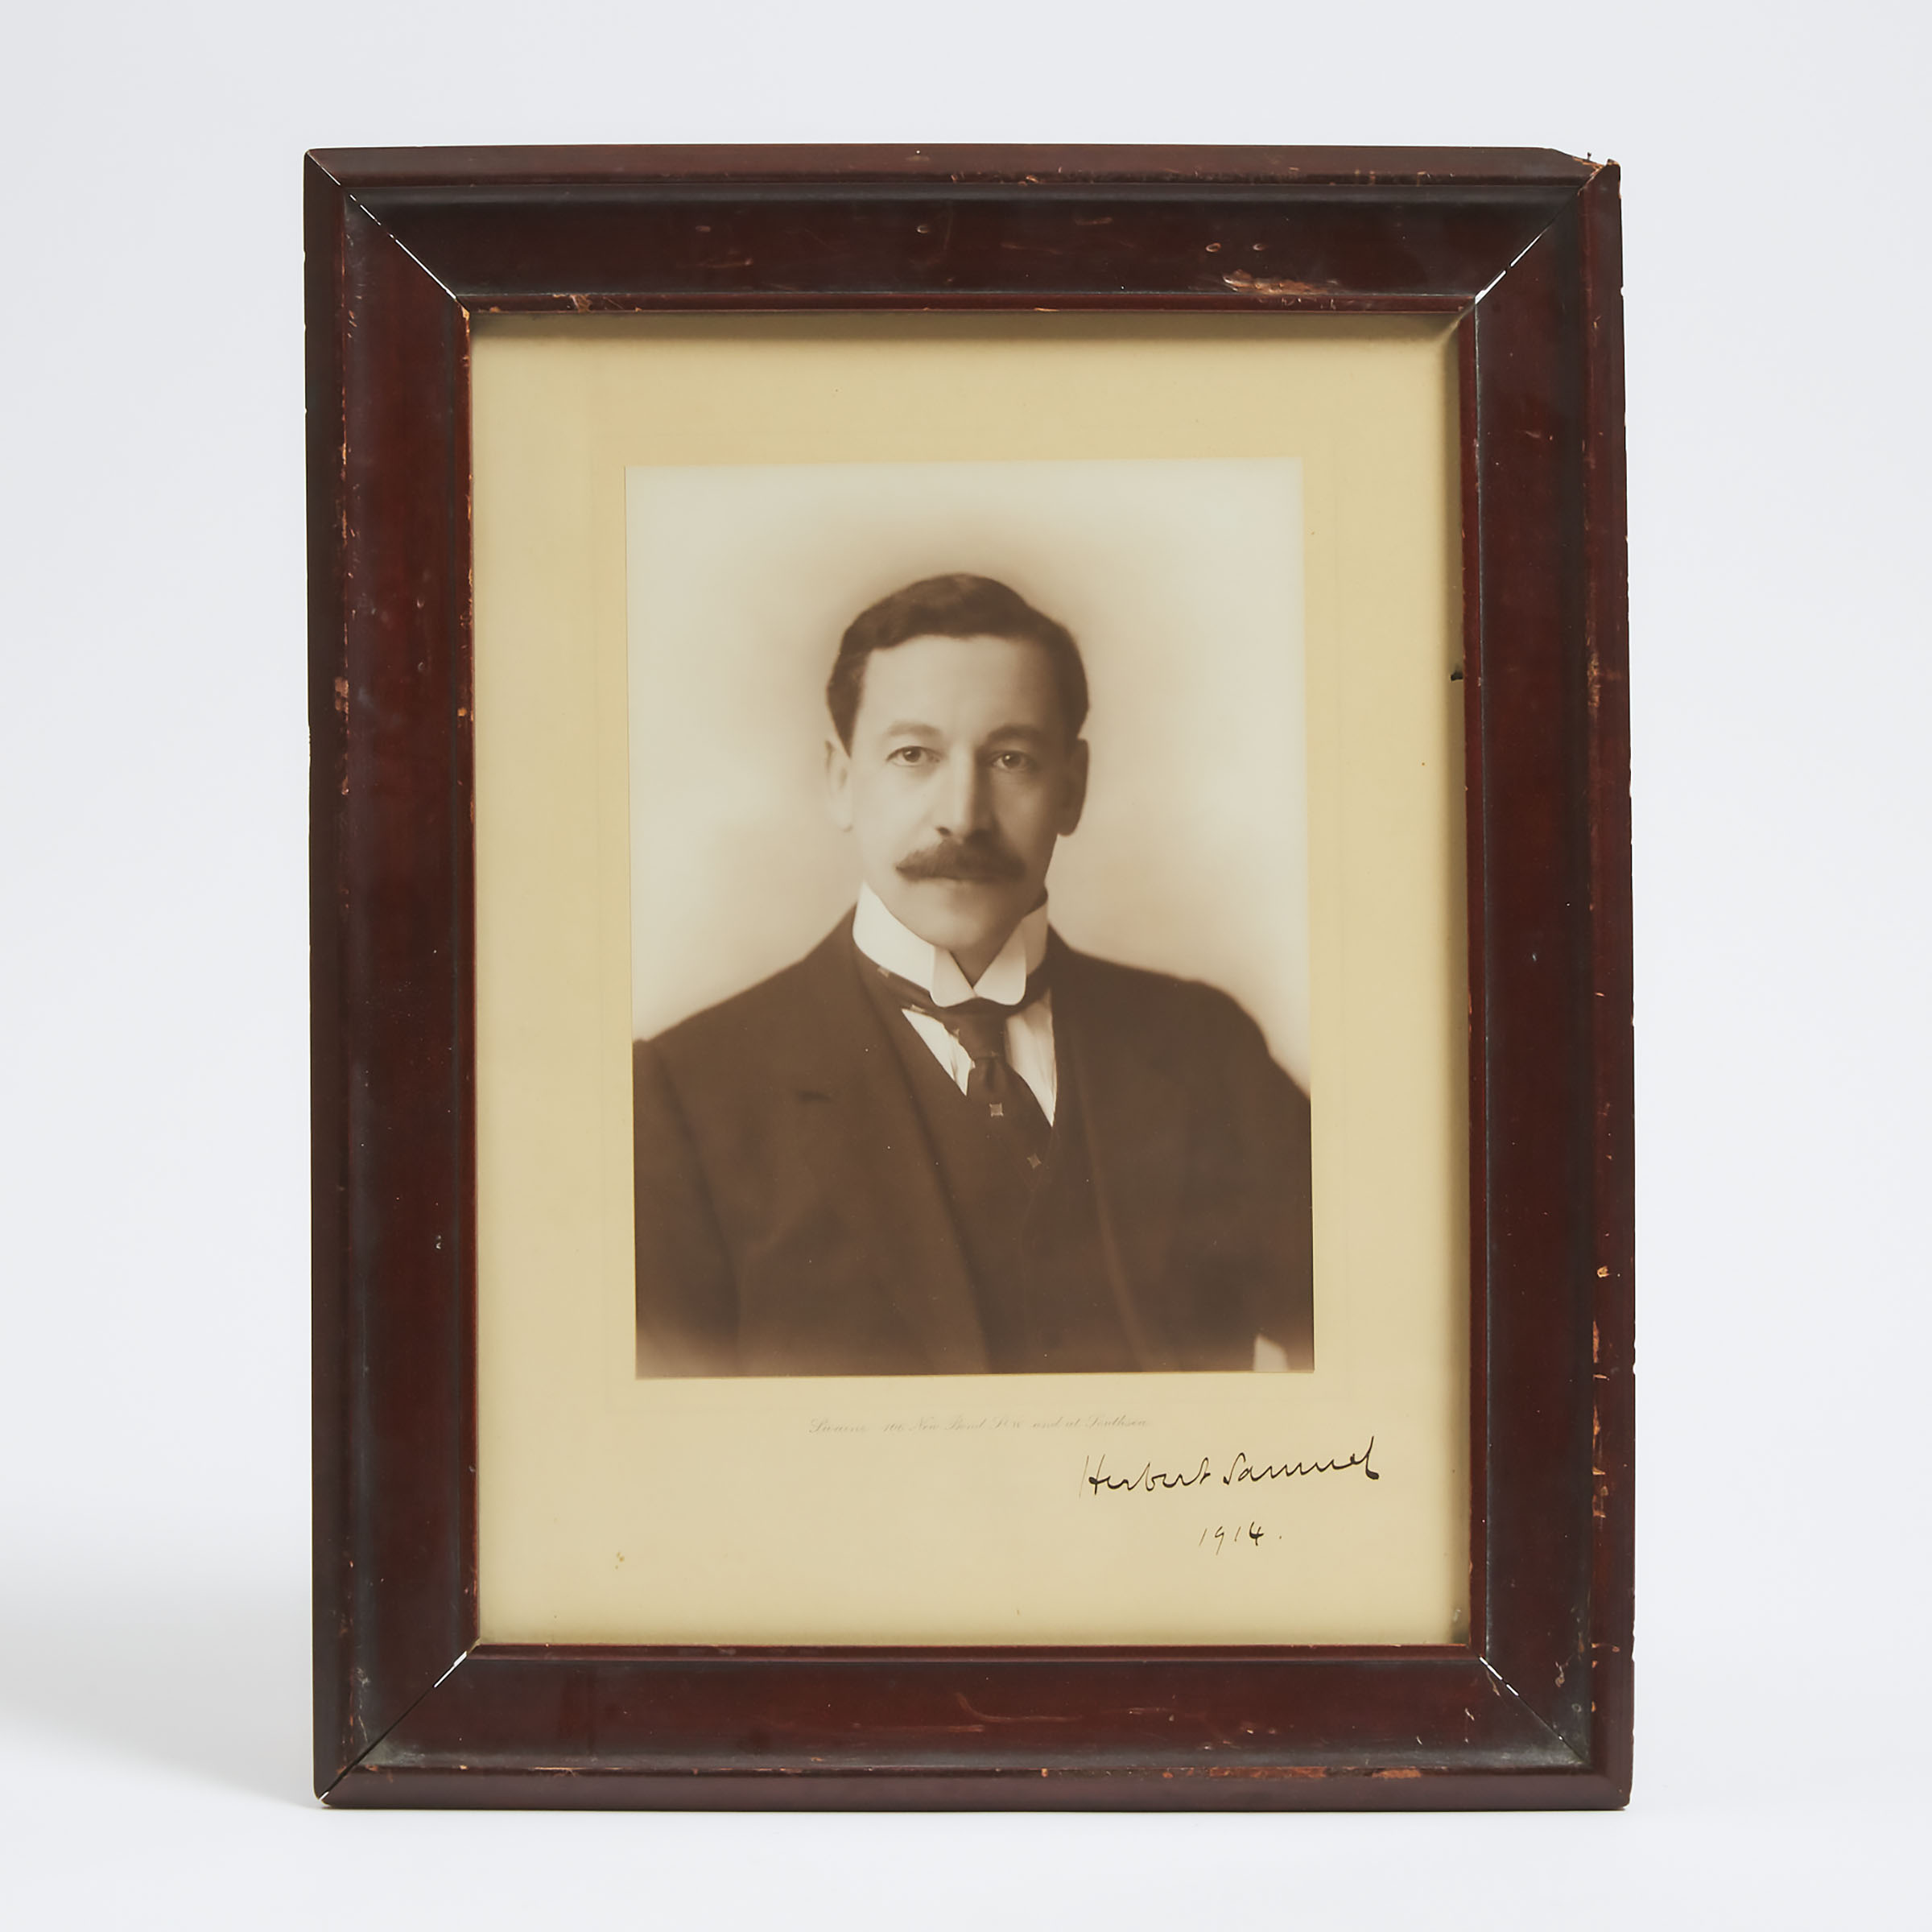 Signed Photograph Portrait of Herbert Samuel, 1st Viscount Samuel, 1914